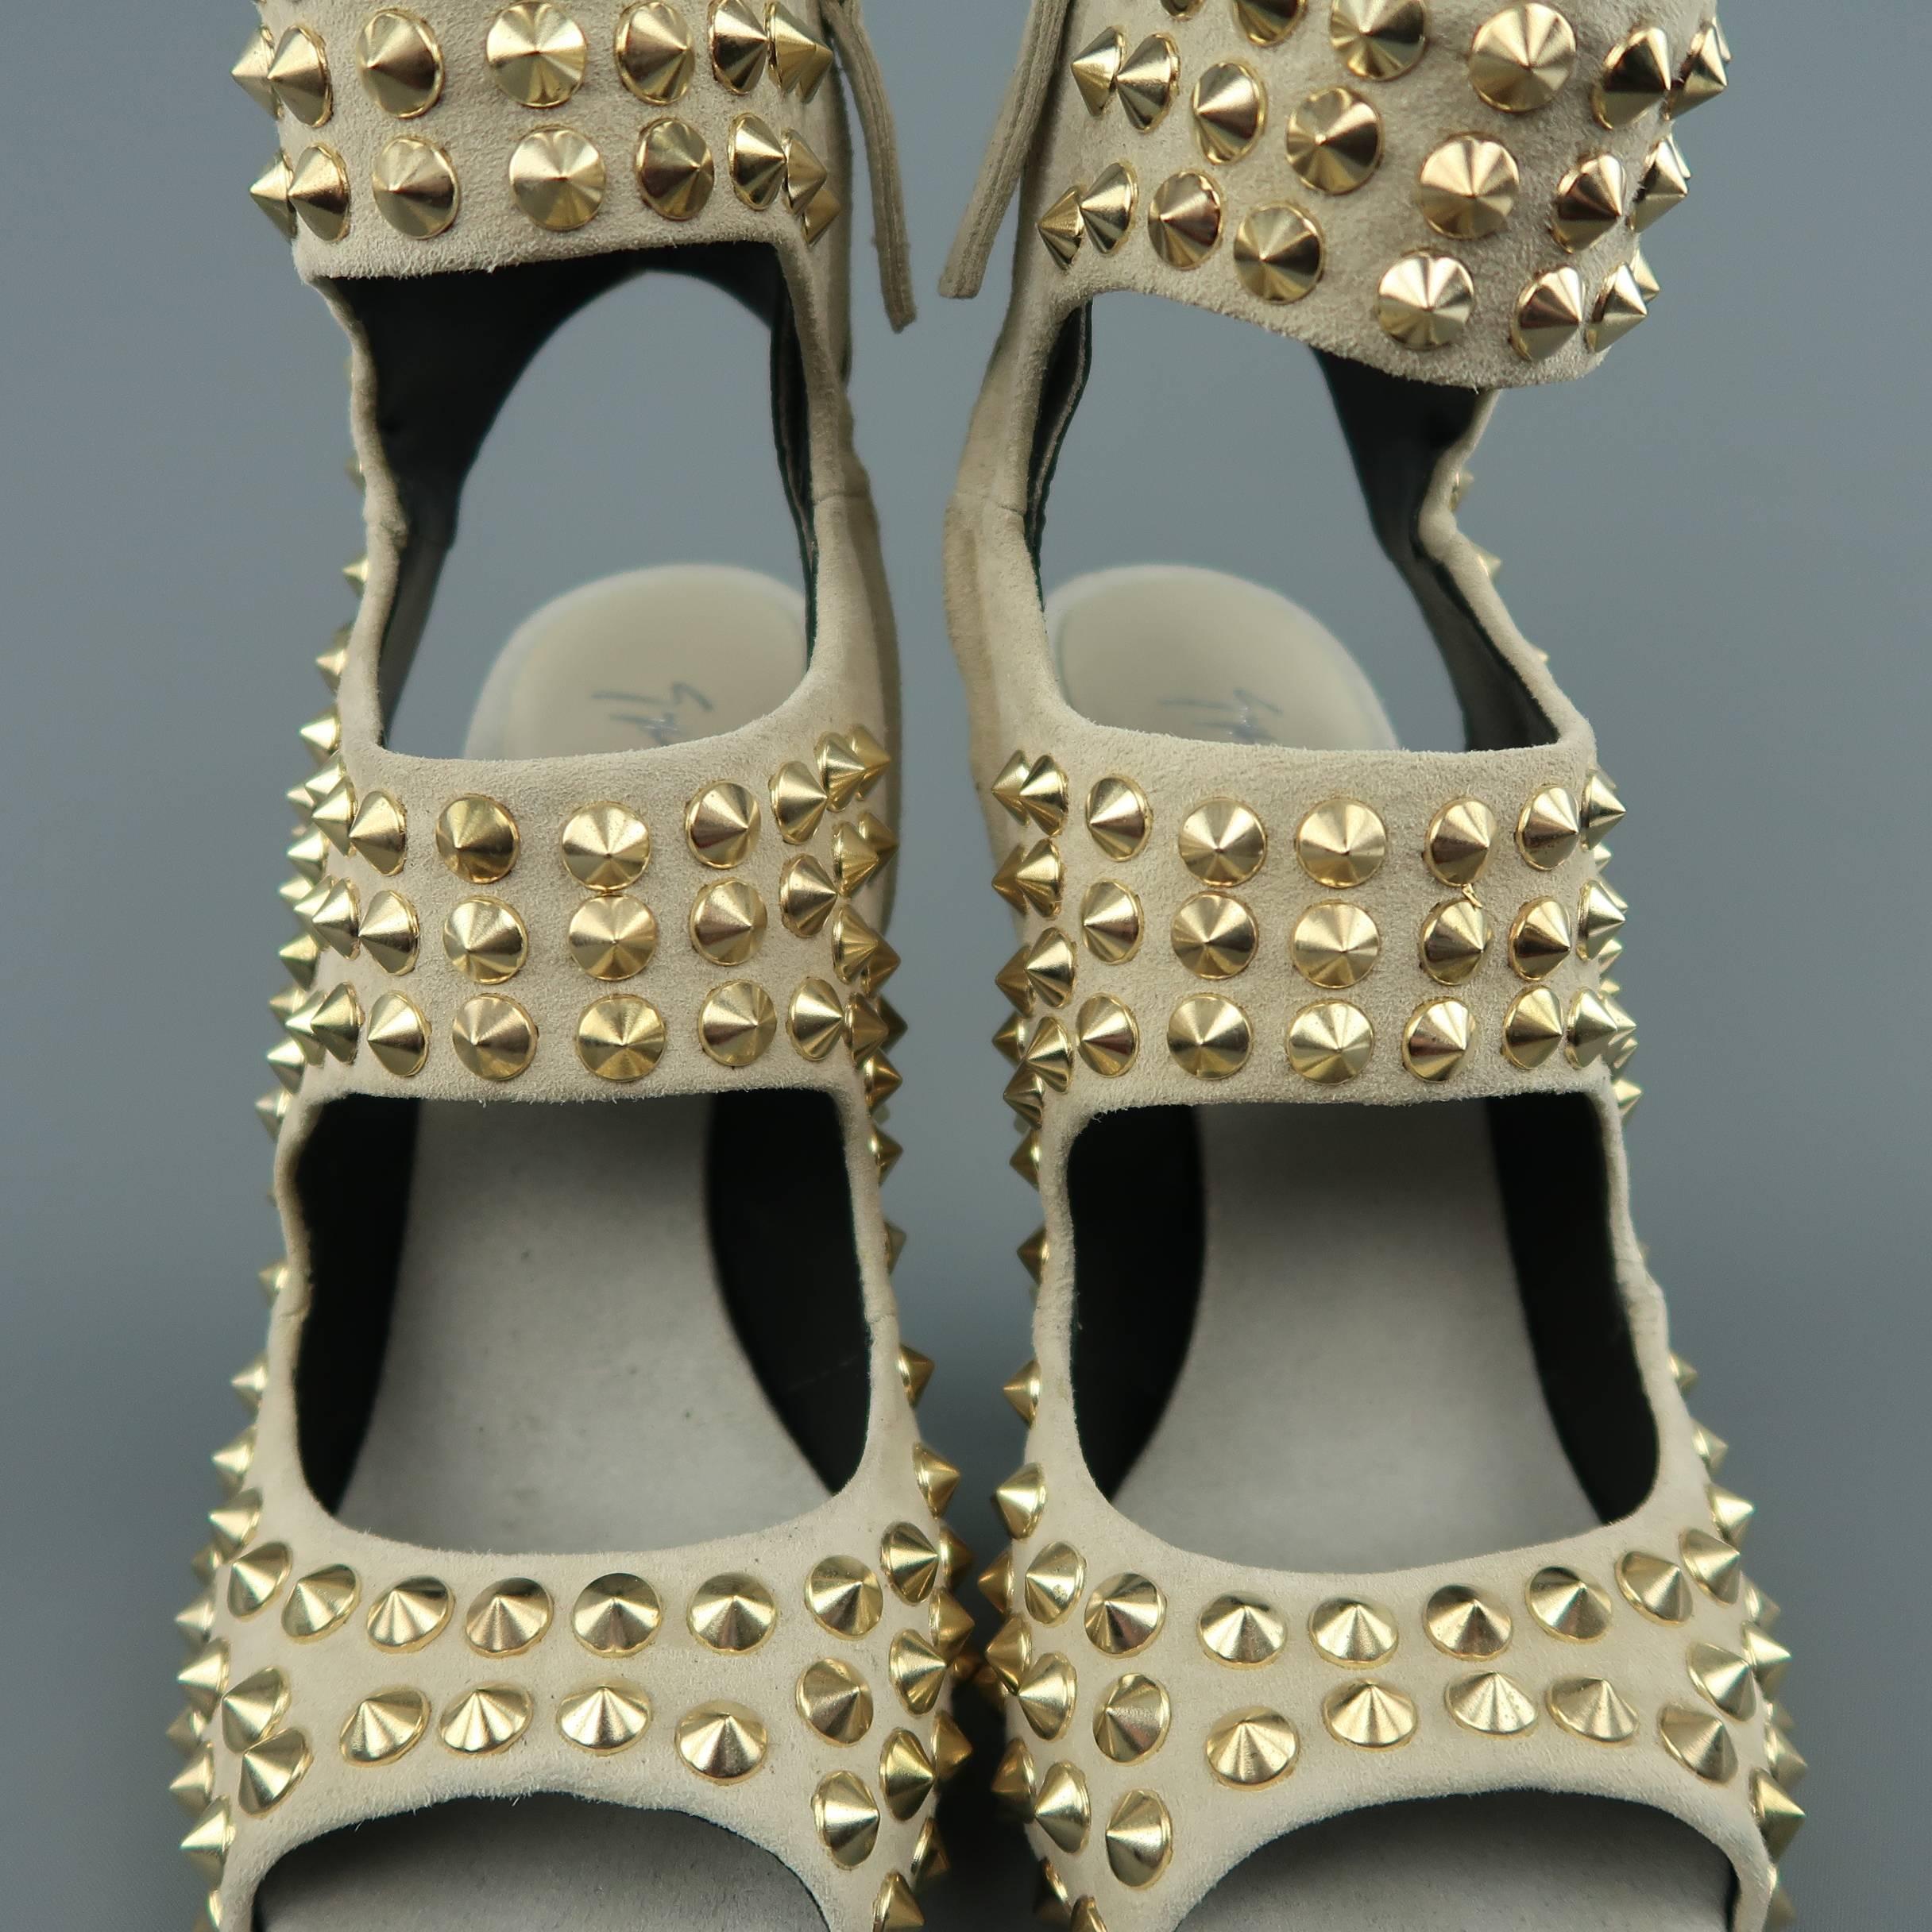 GIUSEPPE ZANOTTI Size 9 Beige Gold Spike Studded Suede Sandals 1